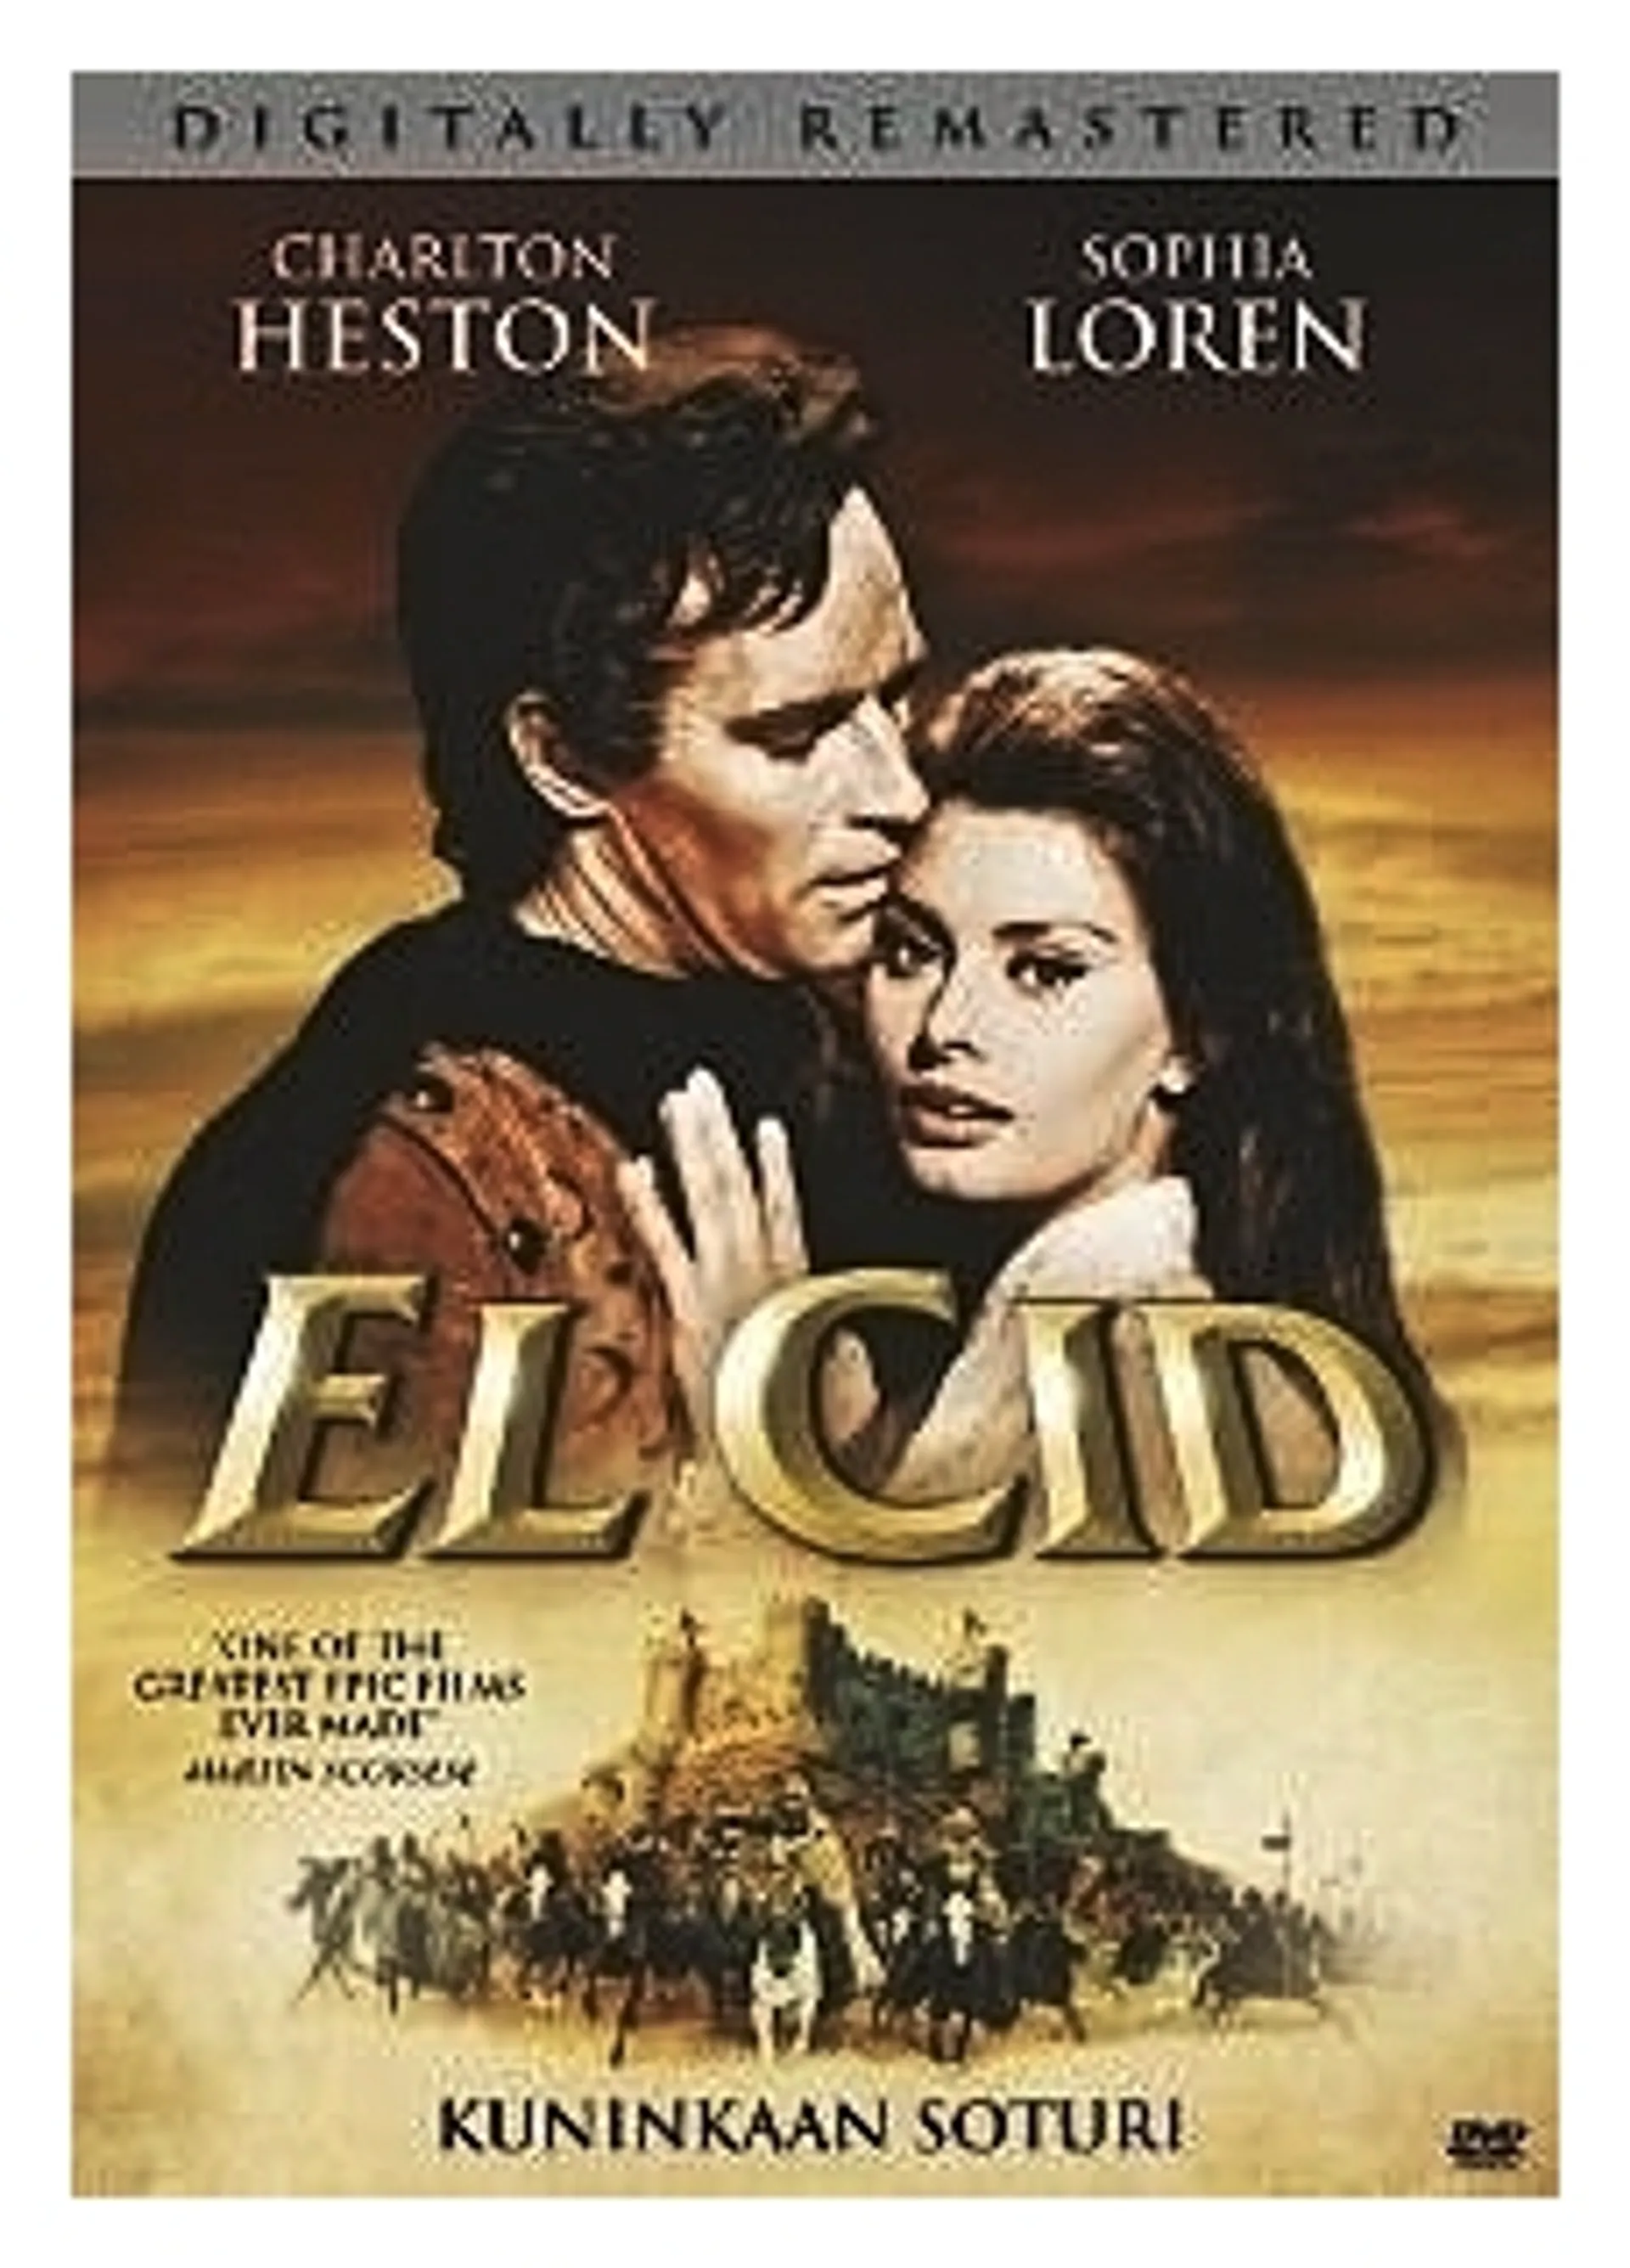 El Cid - Kuninkaan soturi DVD